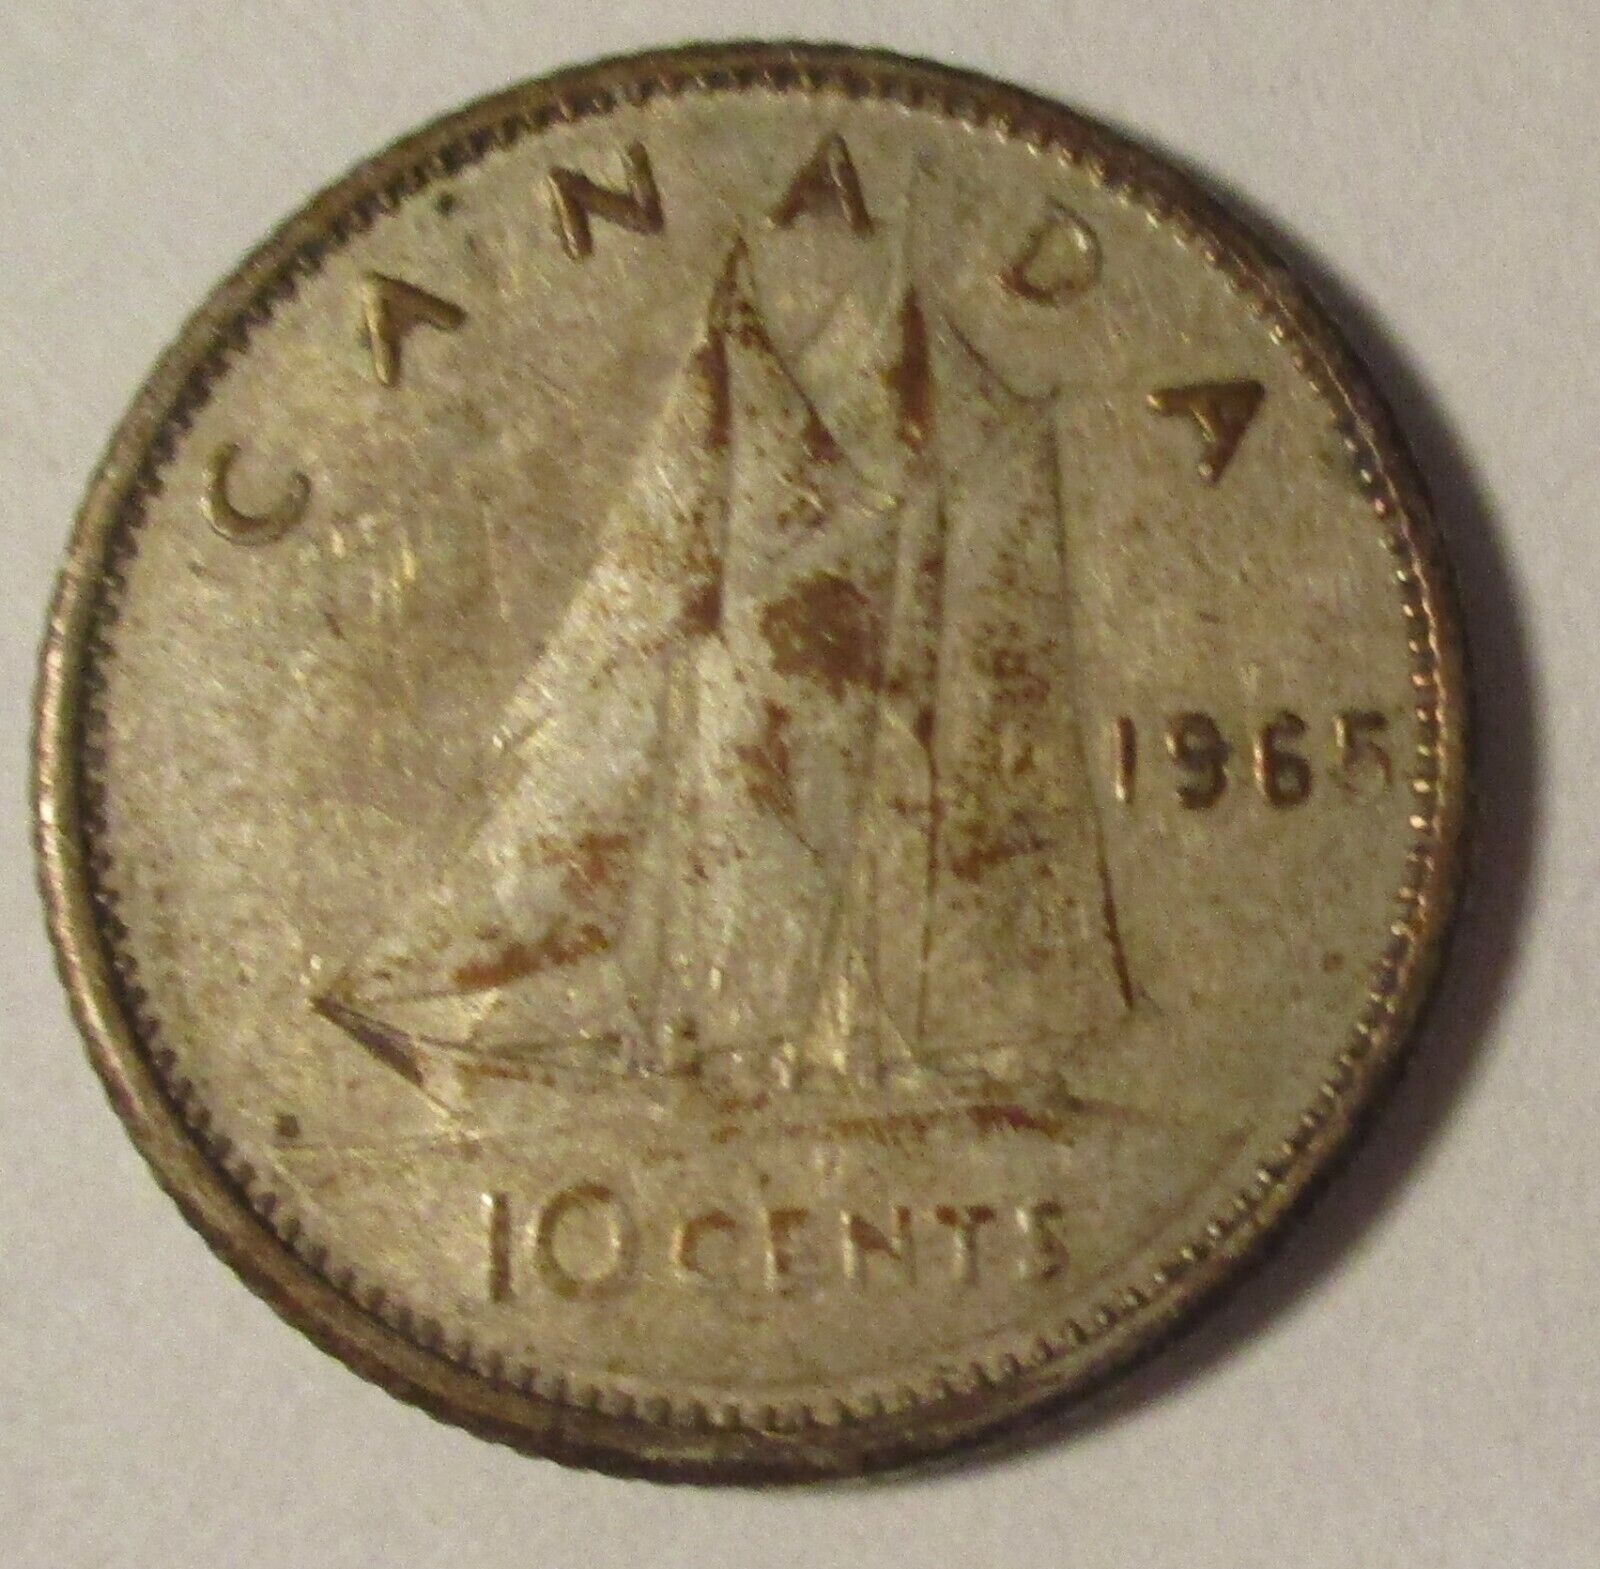 1965 Canada 10 Cent Silver Coin